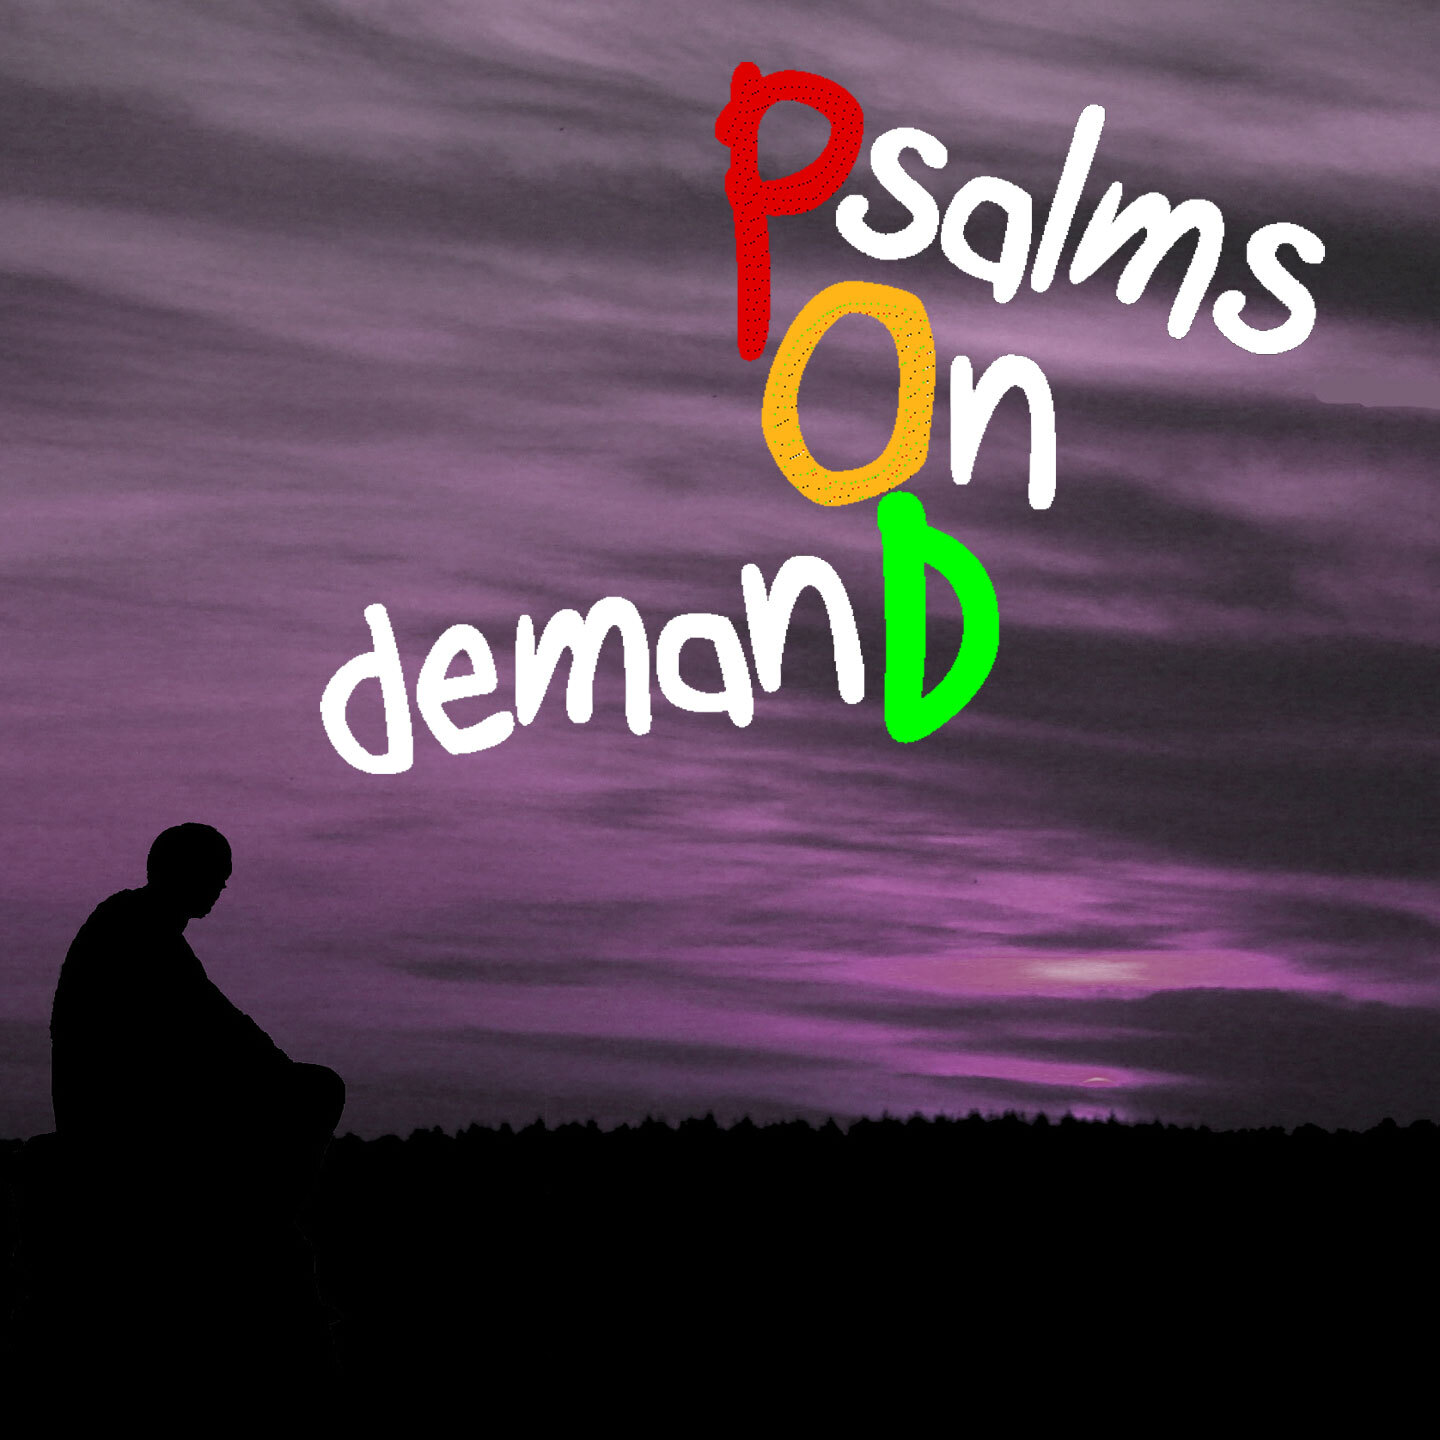 Psalm On Demand - Psalm 96